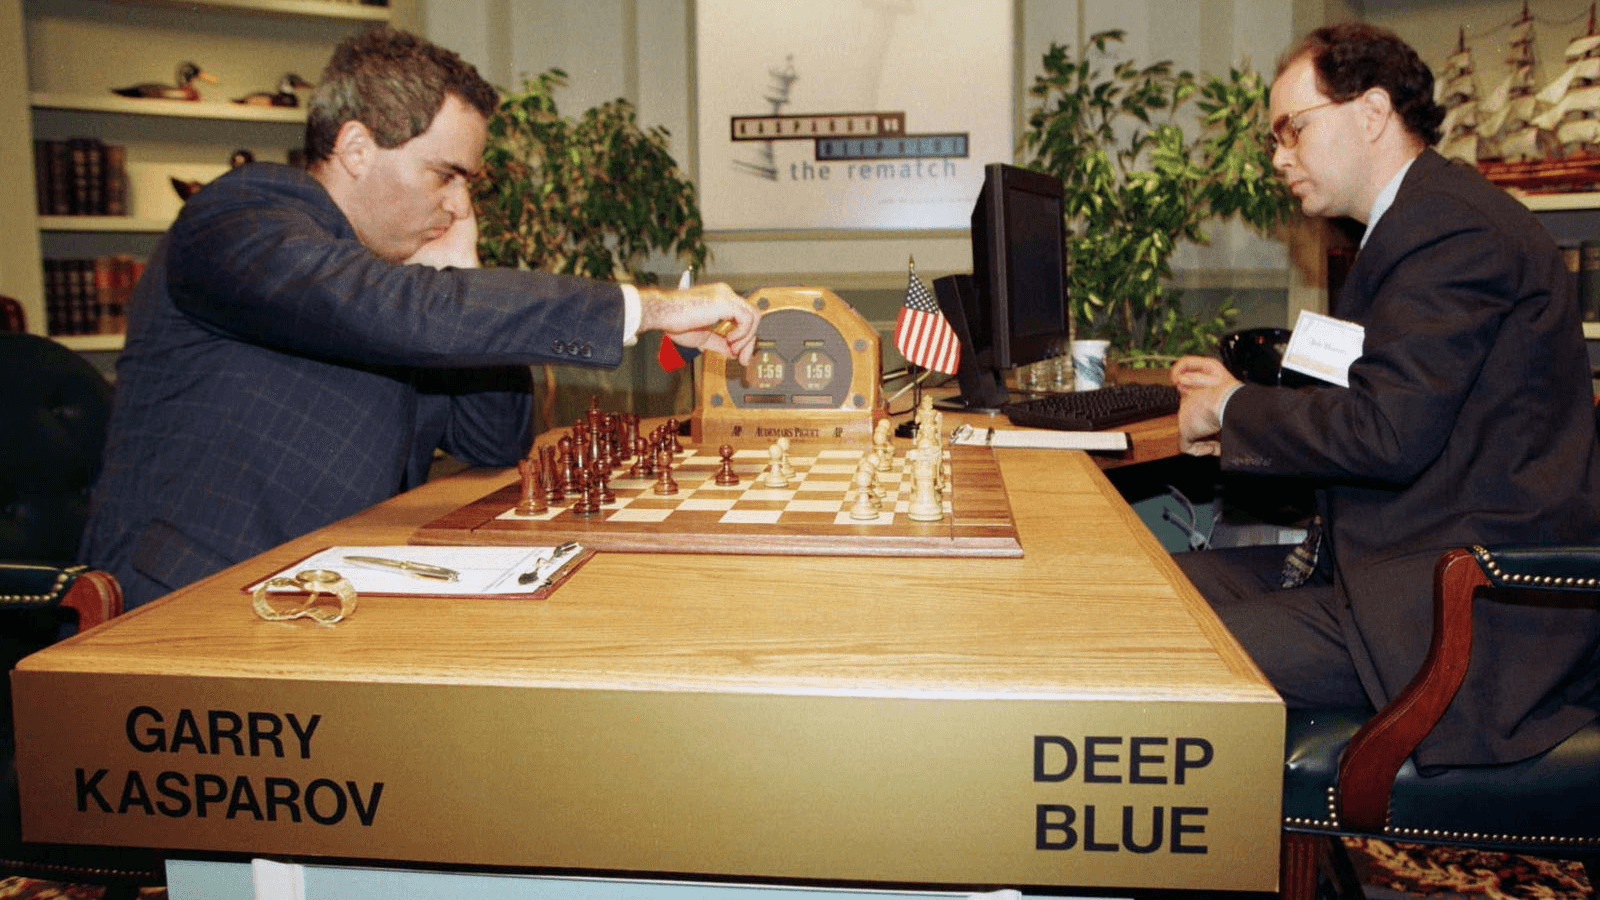 Советская машина шахматы. Каспаров против Deep Blue 1996.